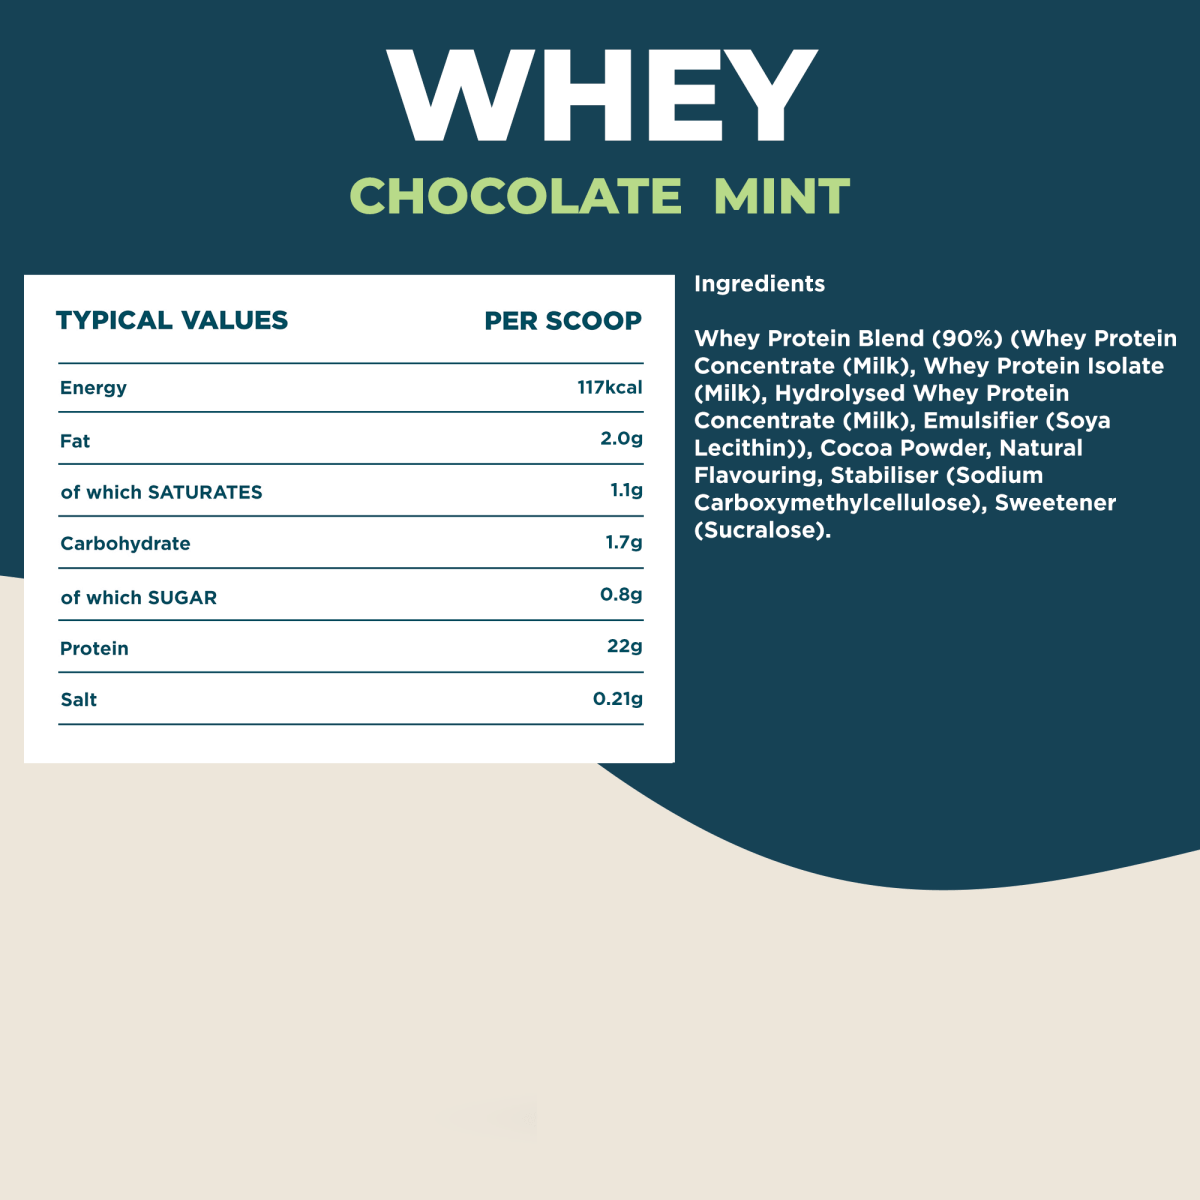 Whey Protein Chocolate Mint 1kg - #kinetica-sports#